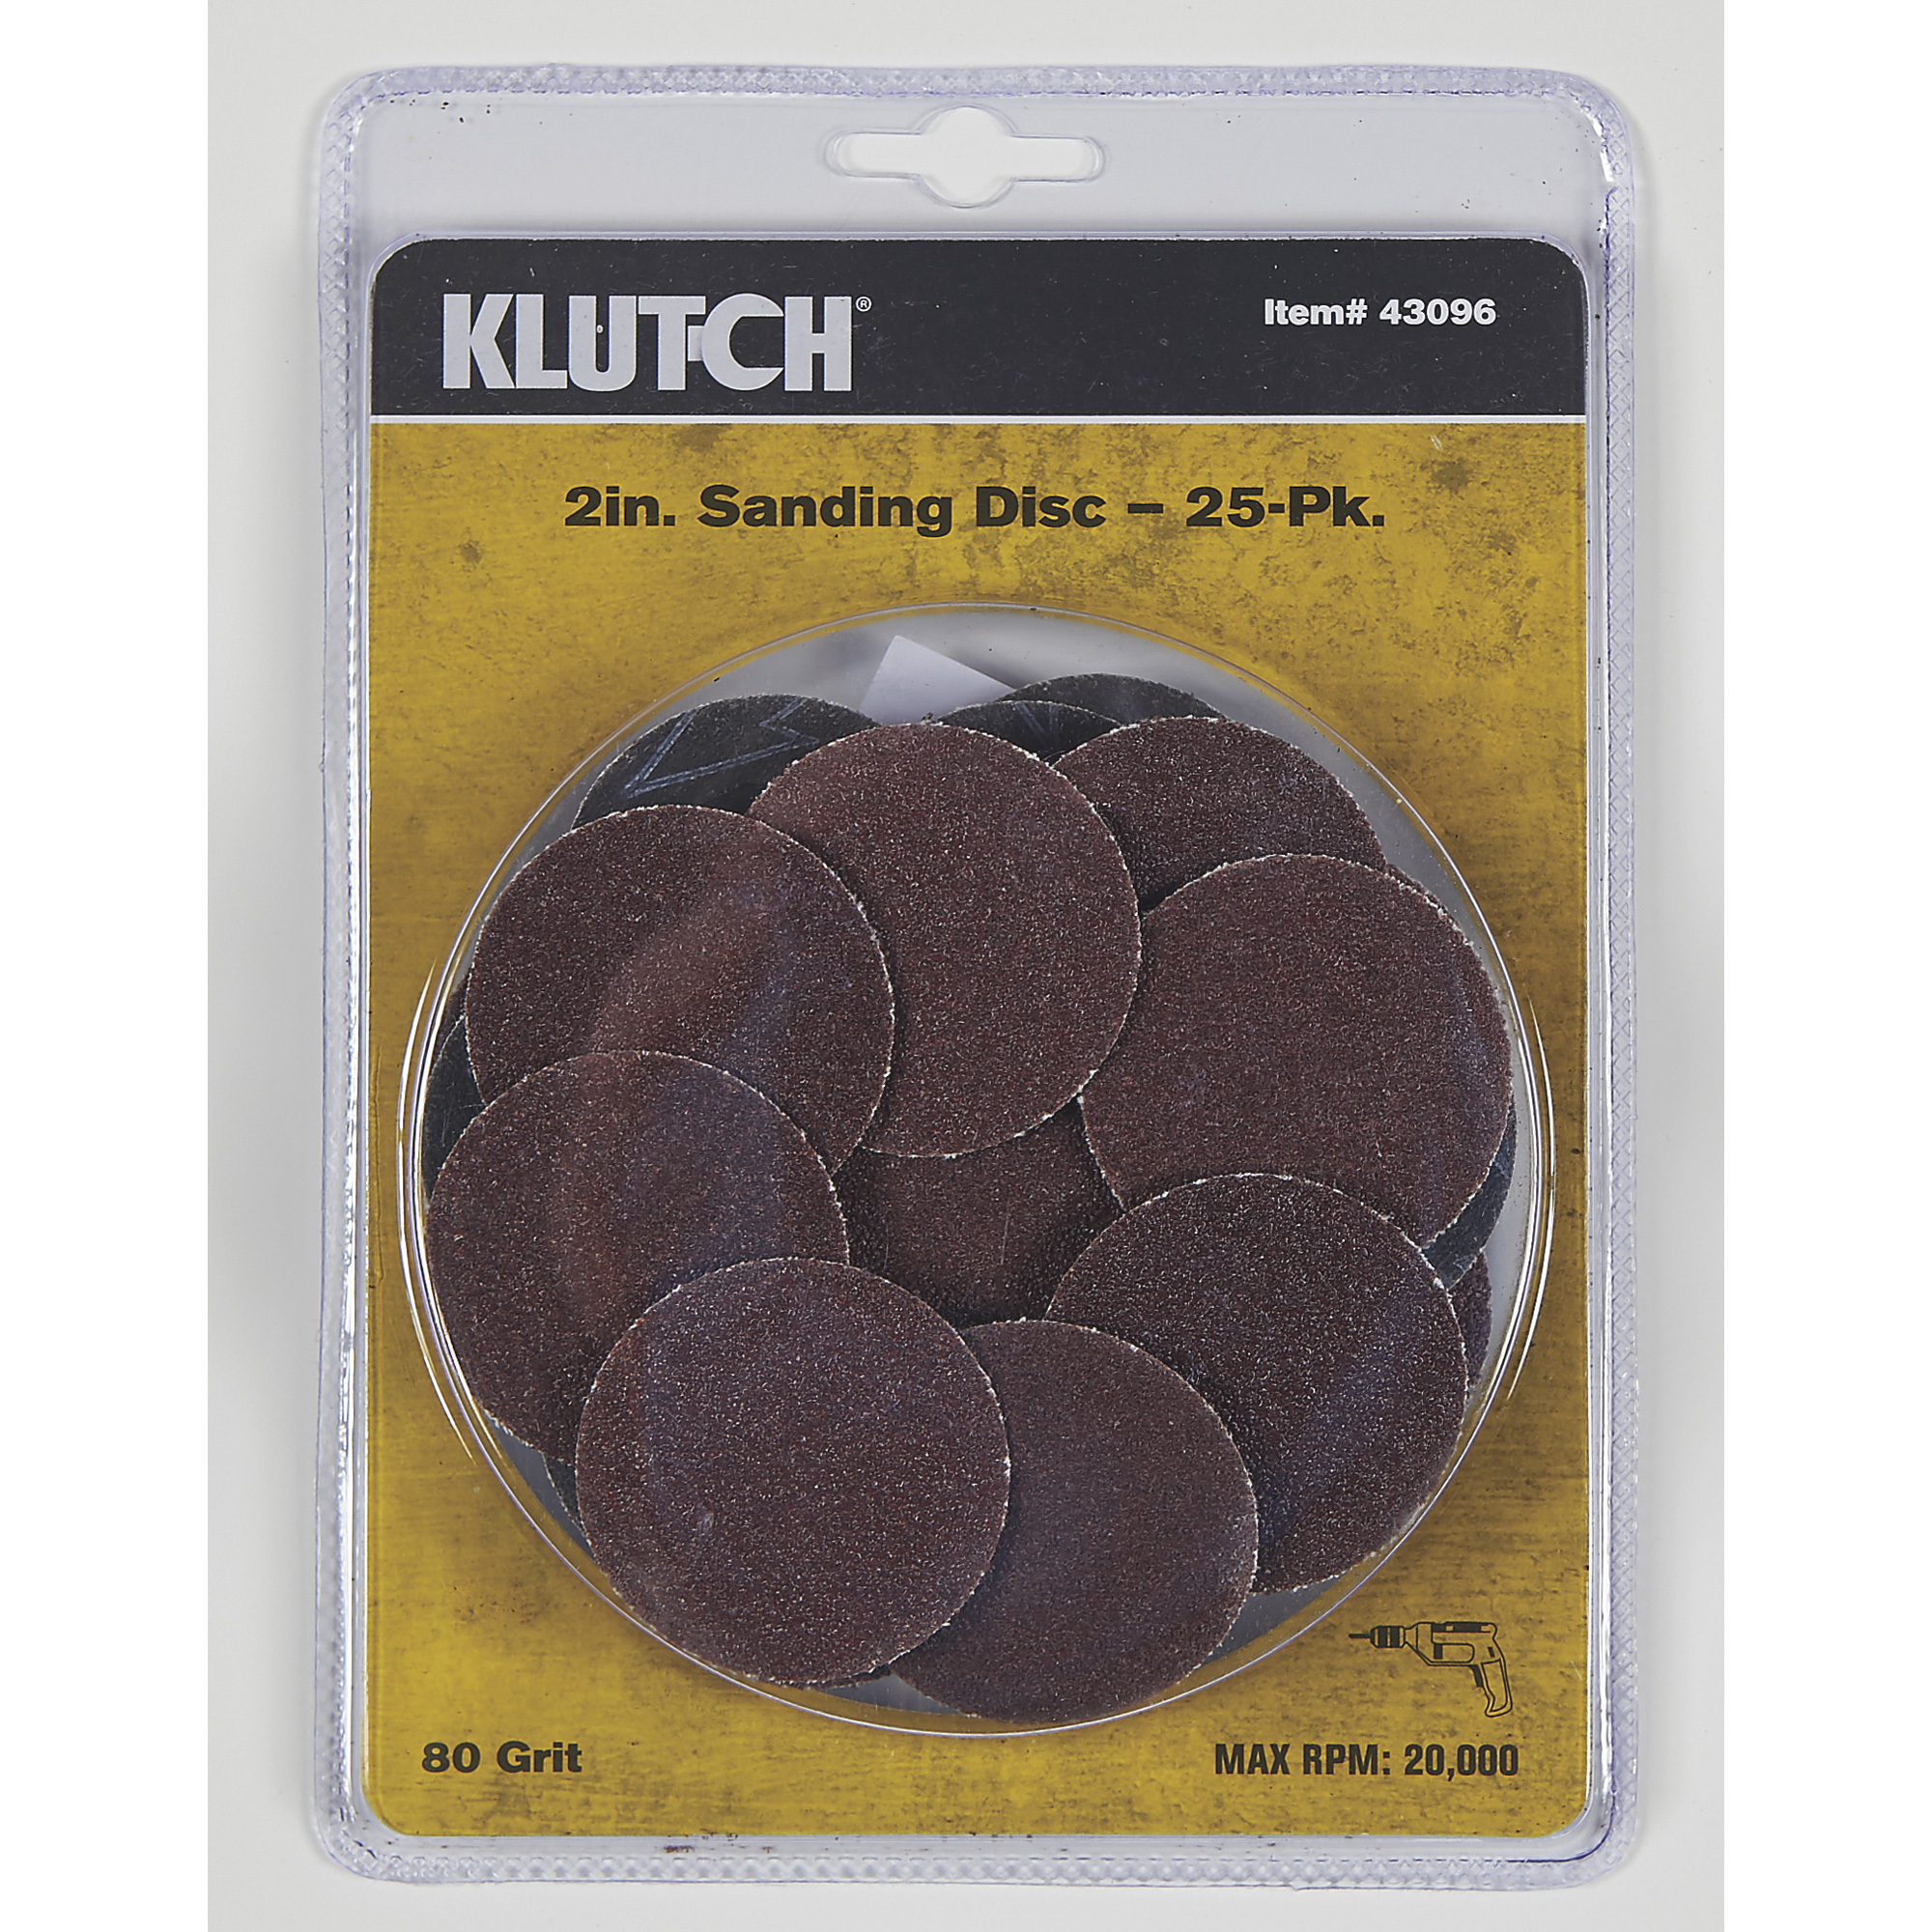 Klutch 2Inch Sanding Discs, 25-Pack, 80 Grit